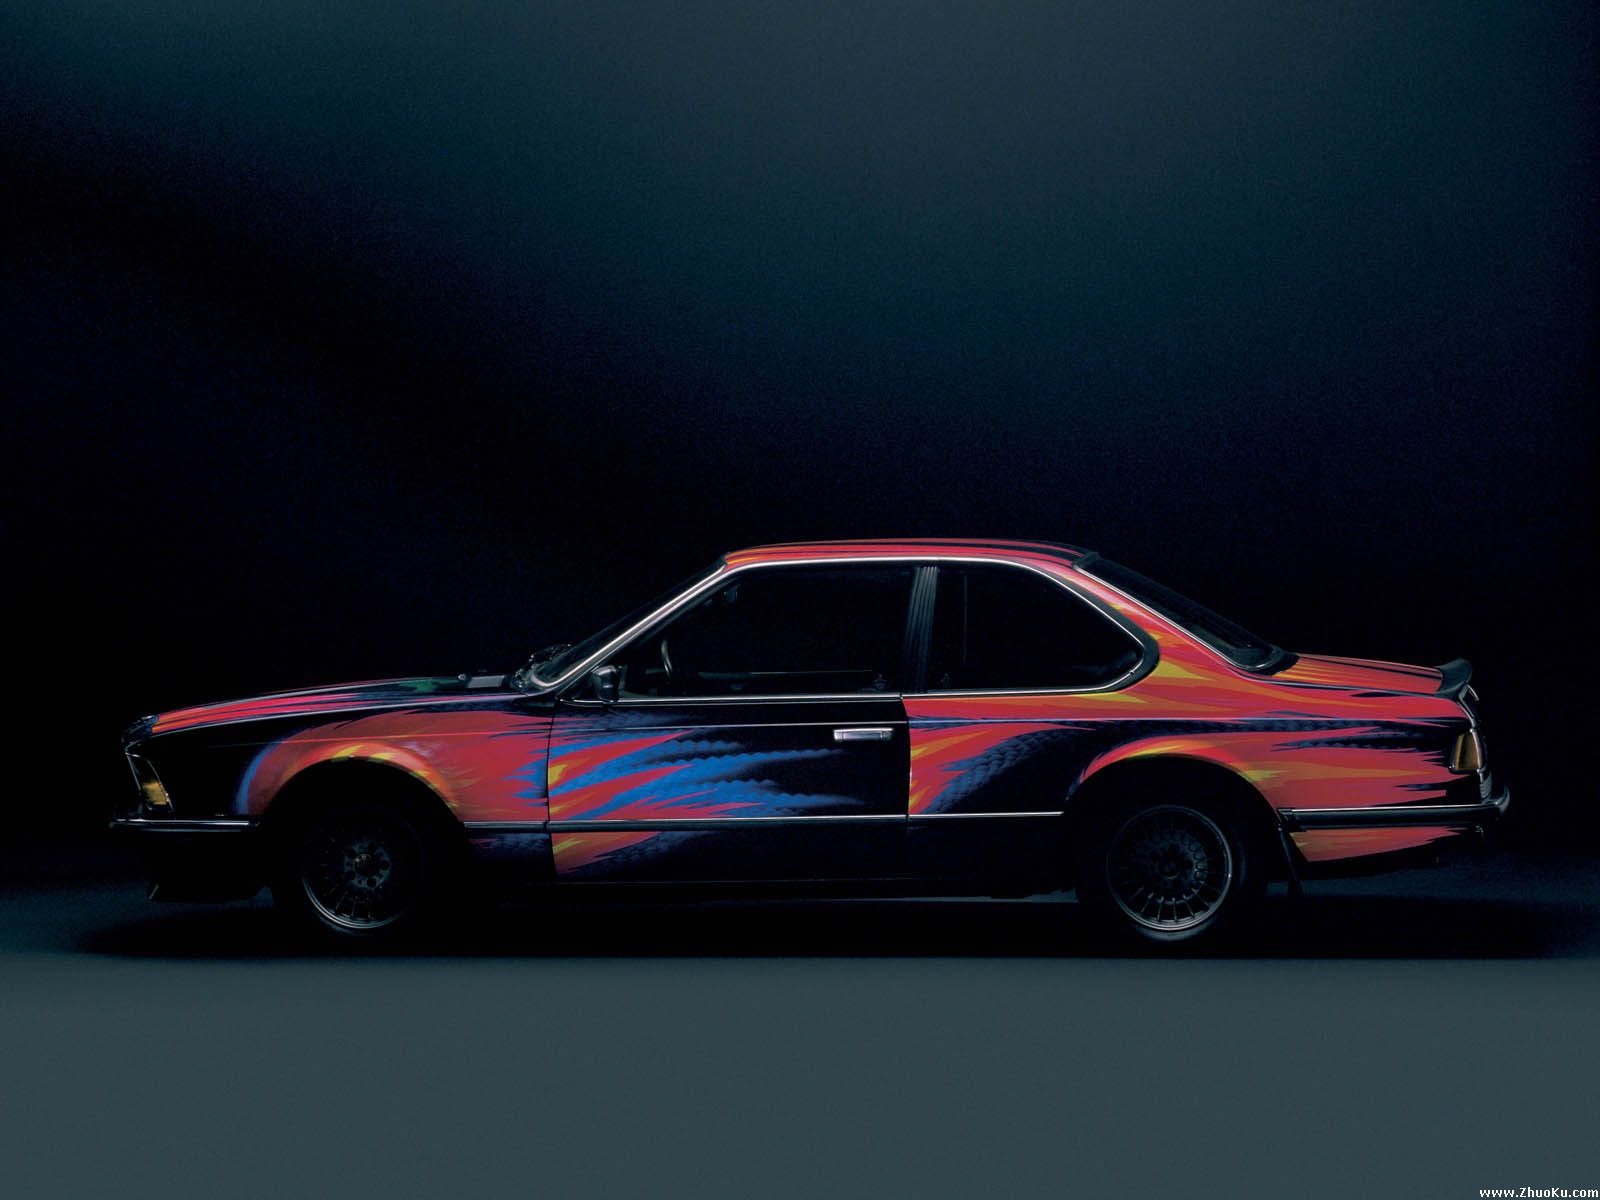  BMWは、ArtCarsの壁紙 #4 - 1600x1200